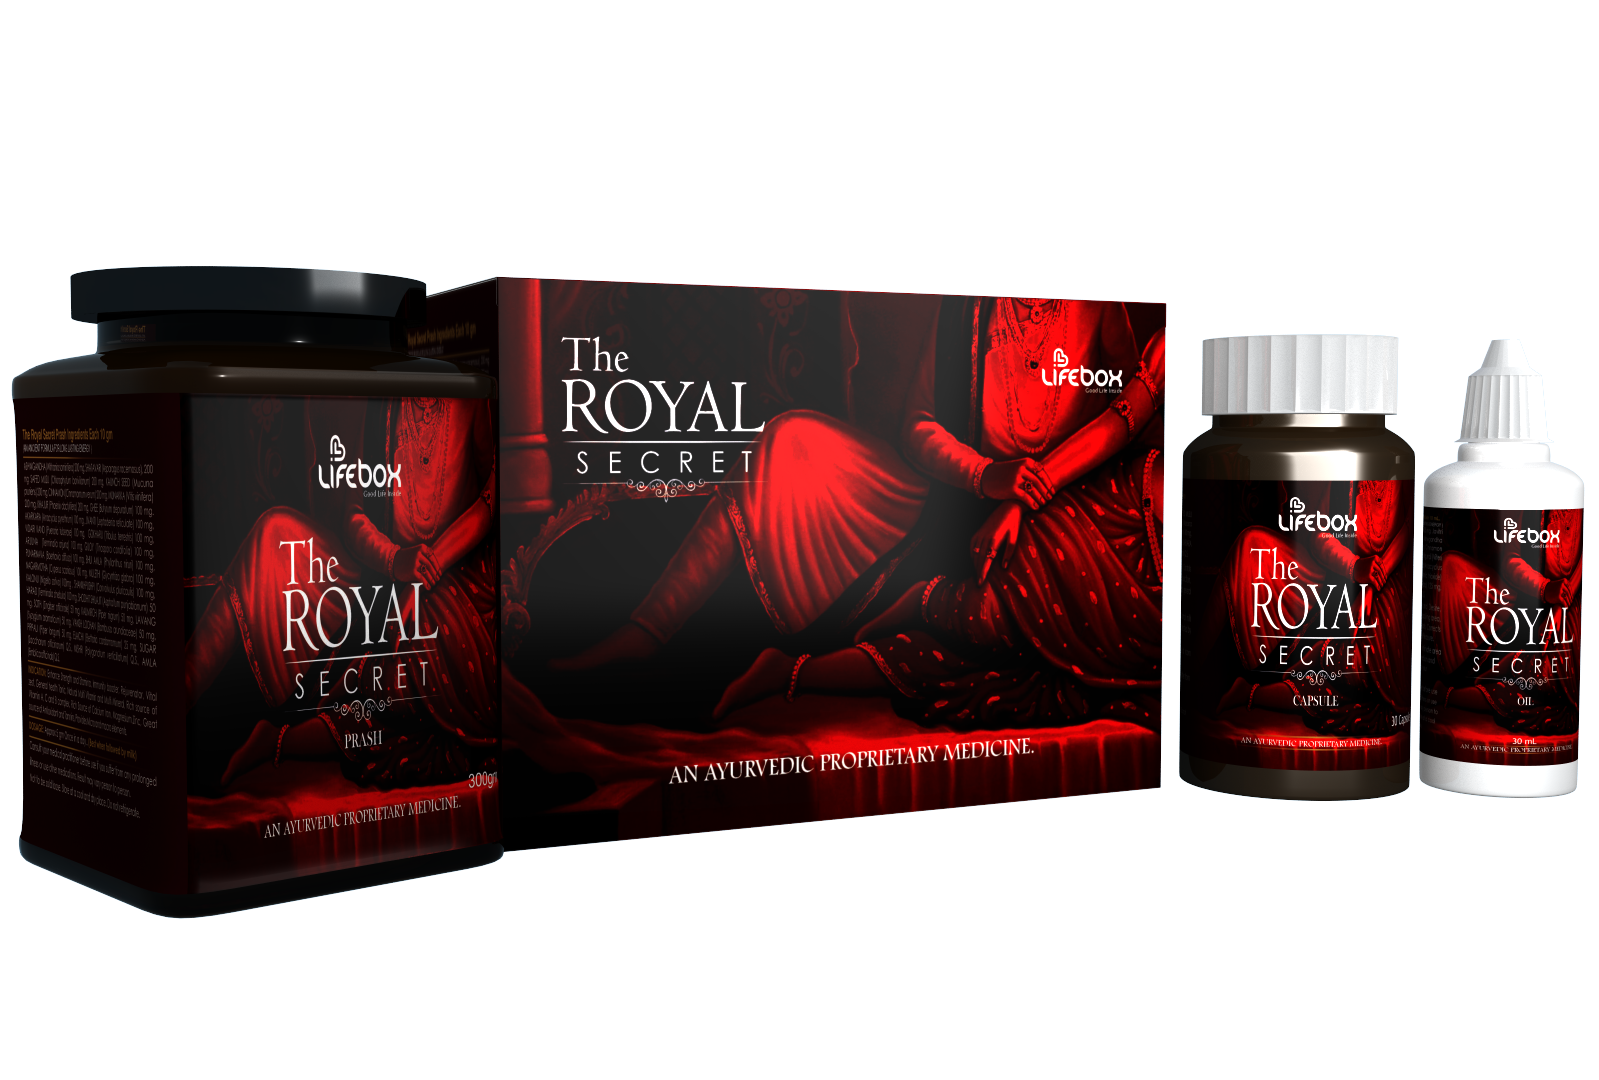 An Overview of the royal secret An Ayurvedic Proprietary Medicine.